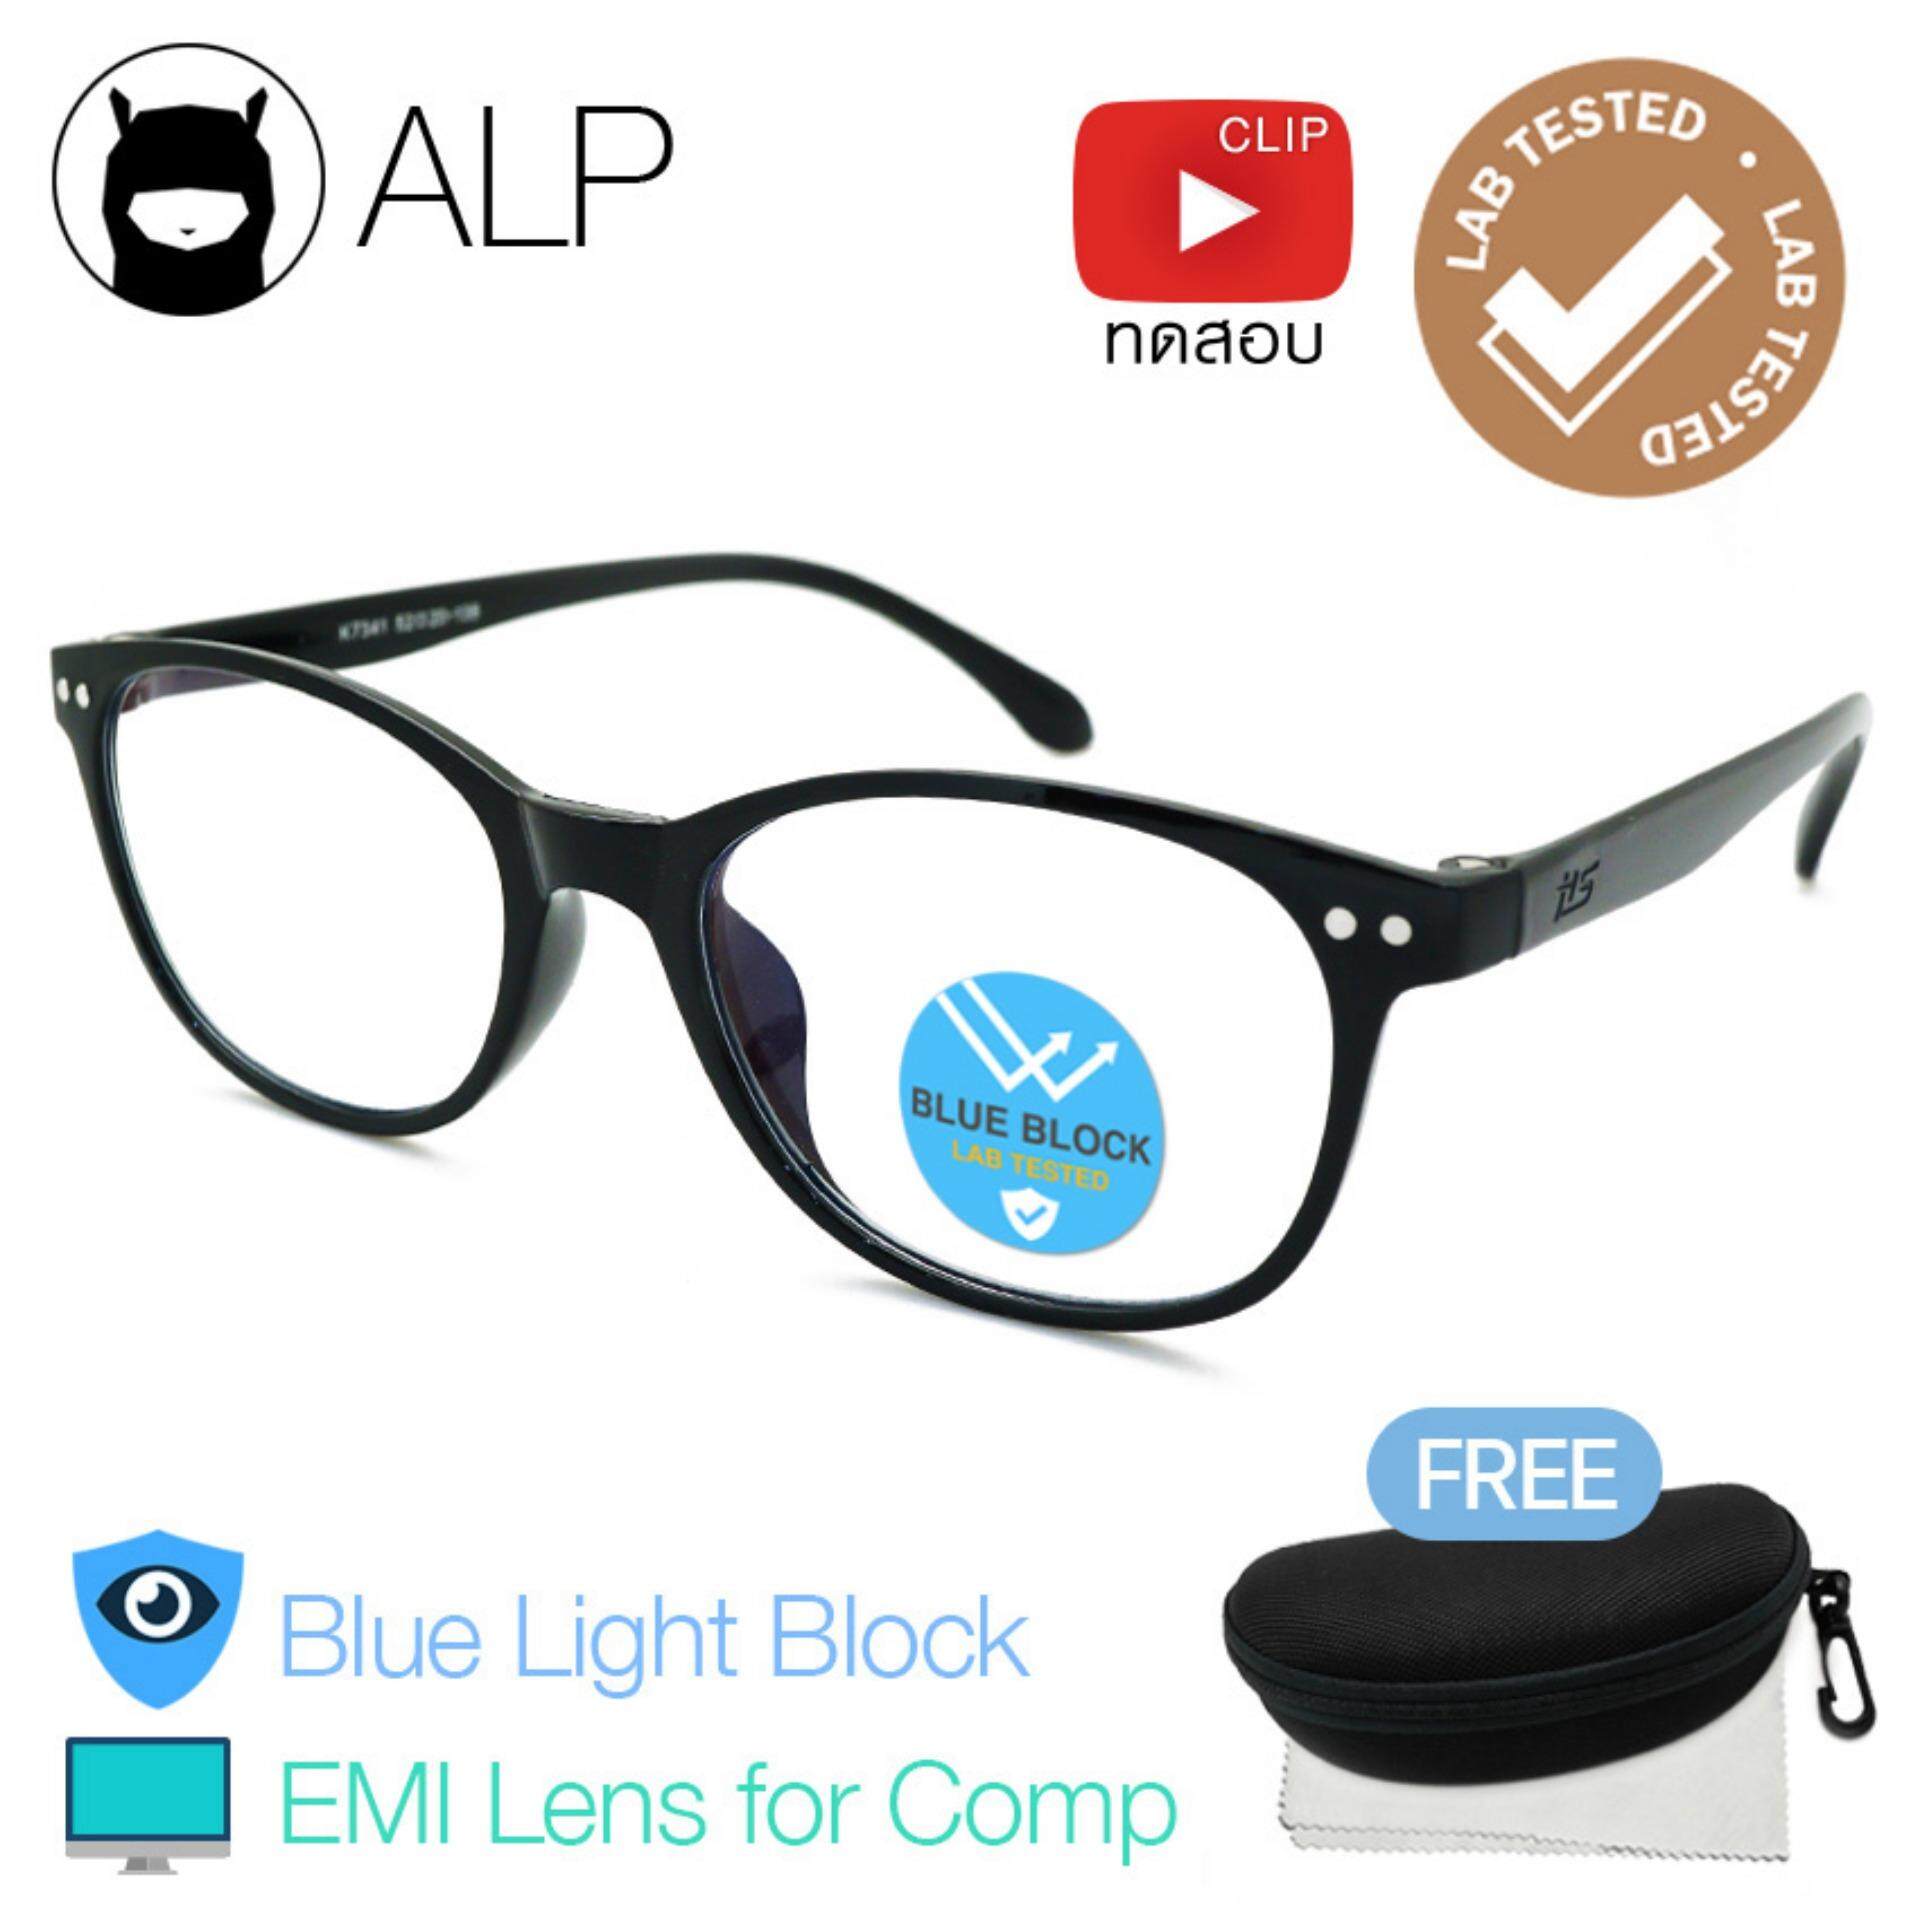 alp-computer-glasses-blue-light-block-uv